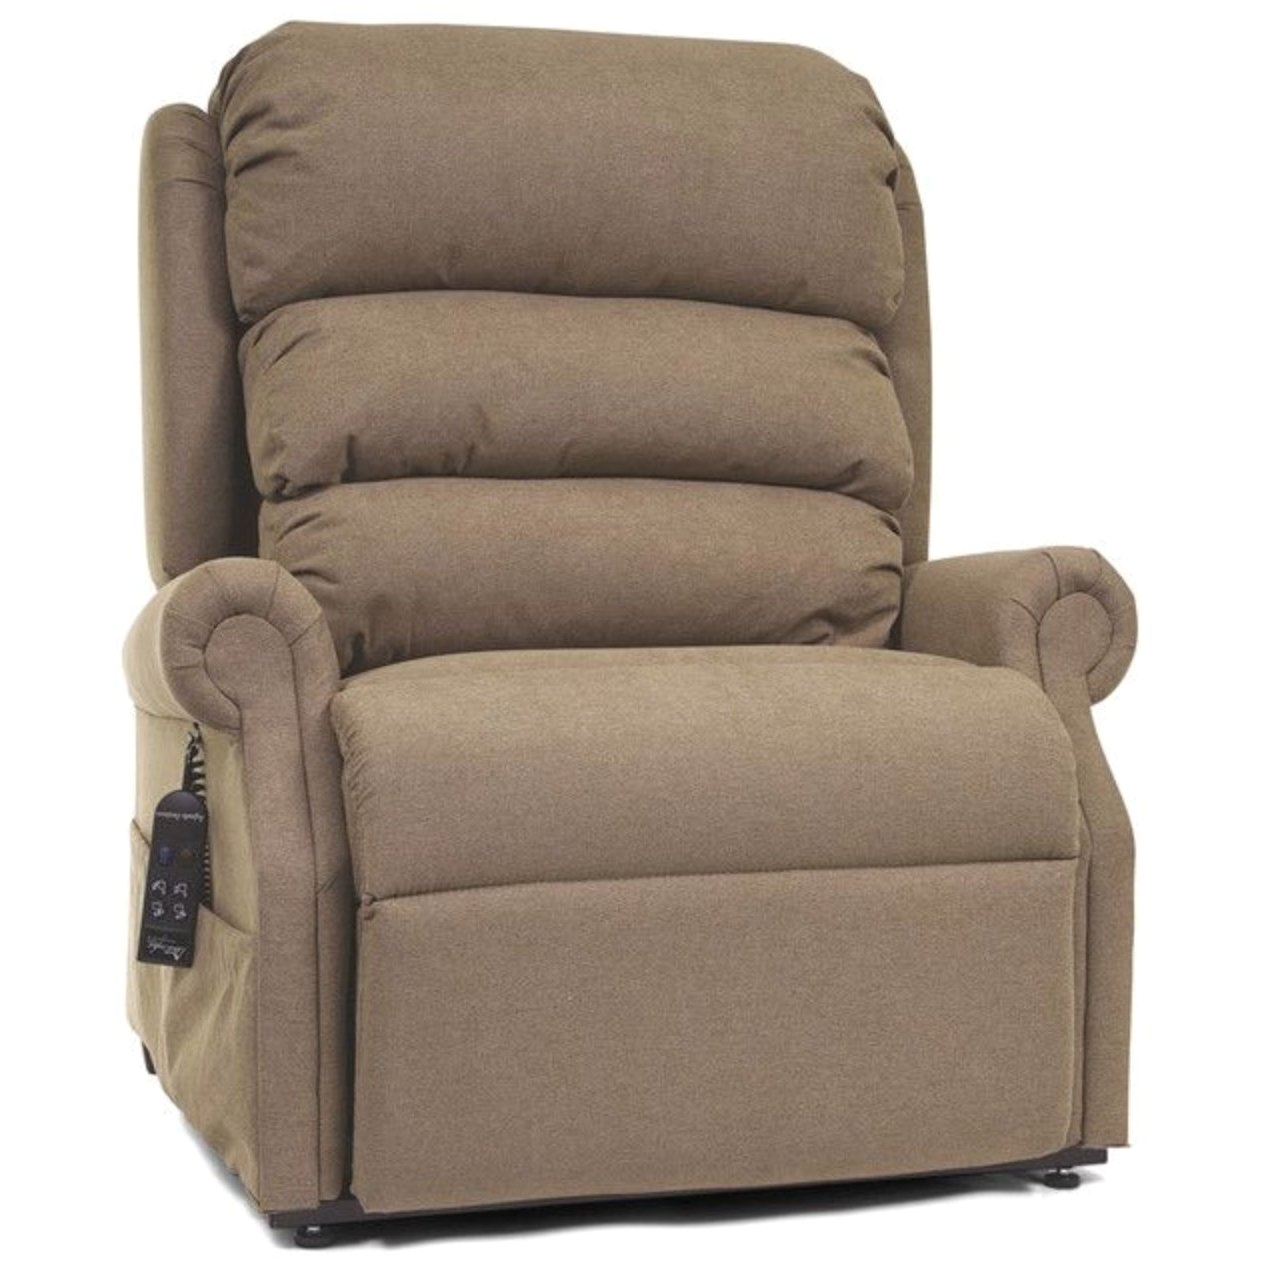 Ultra Comfort Lift Chair Uc550 Uc682 Ultracomfort Stellar Day Dreamer Medium Zero Gravity Lift